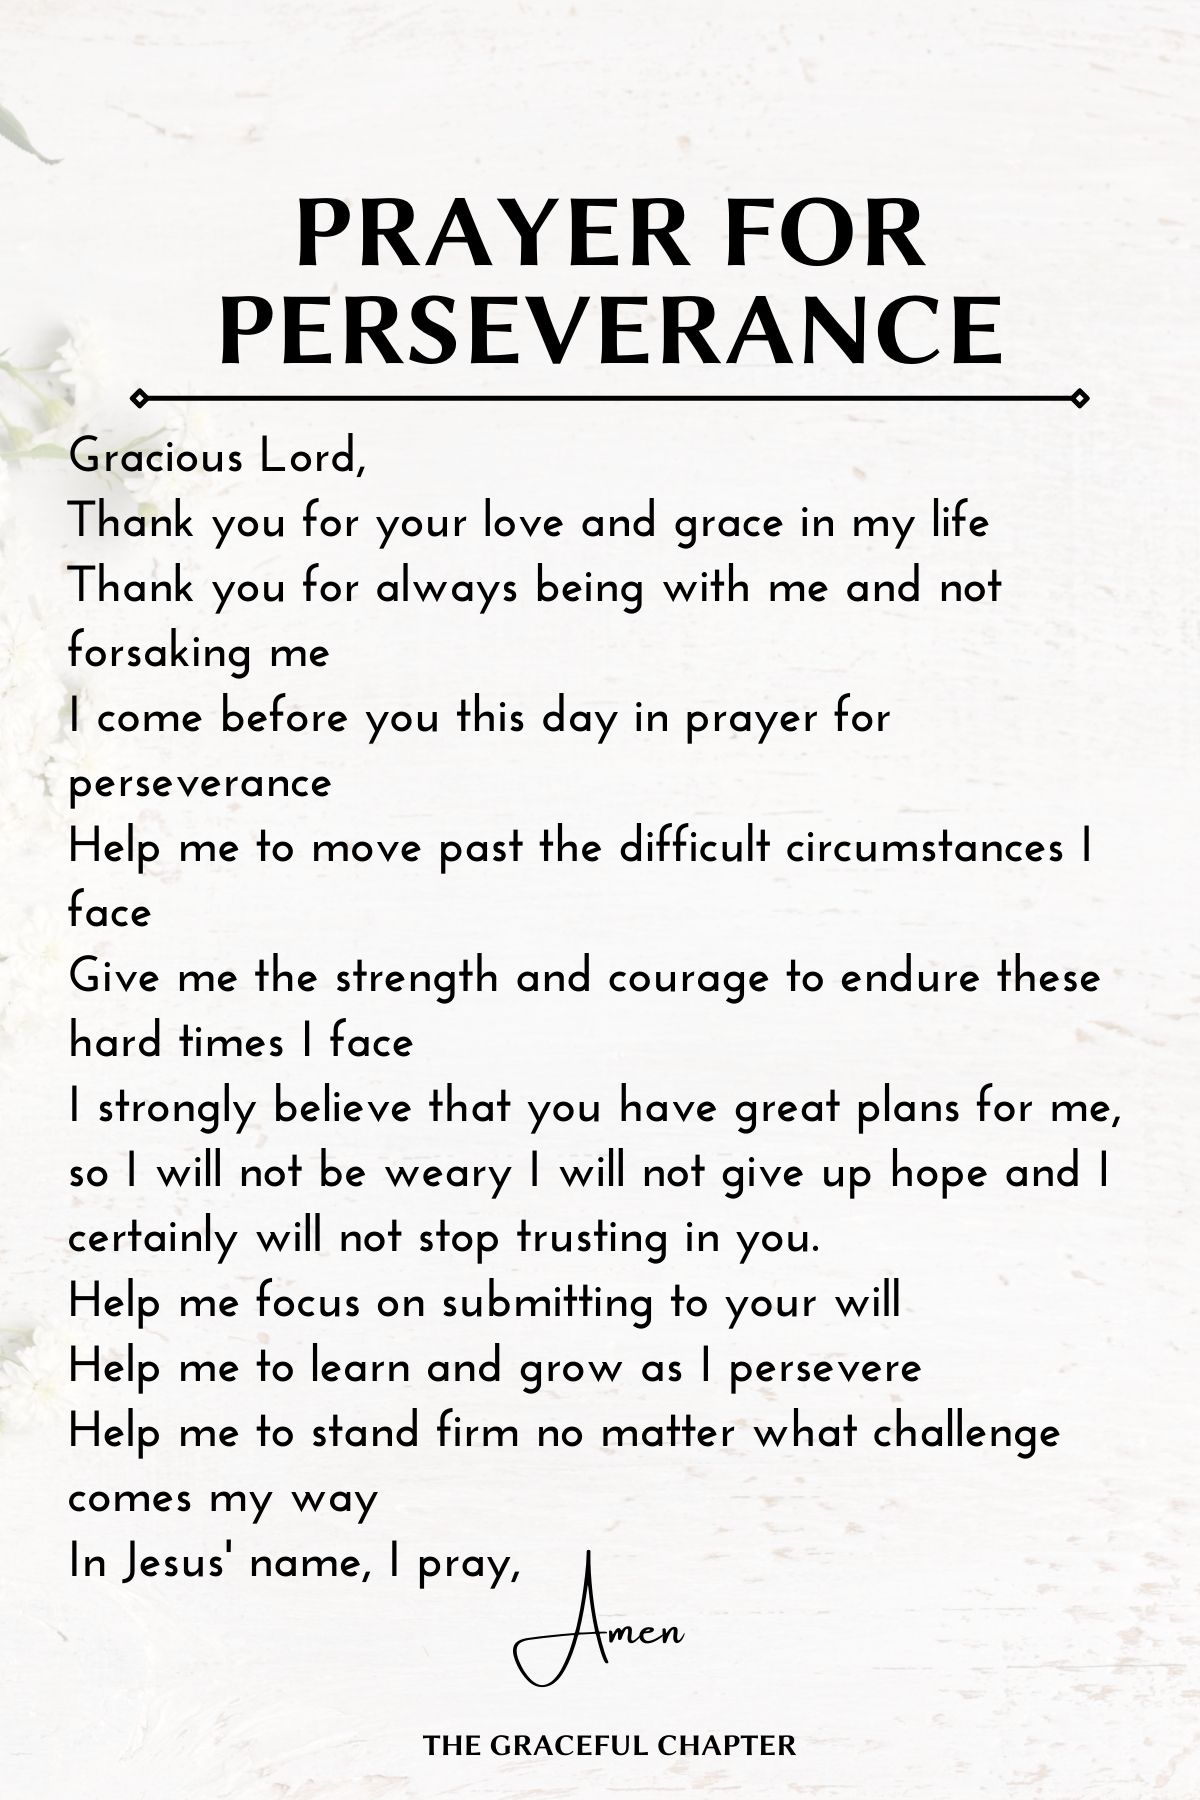 Prayer for perseverance